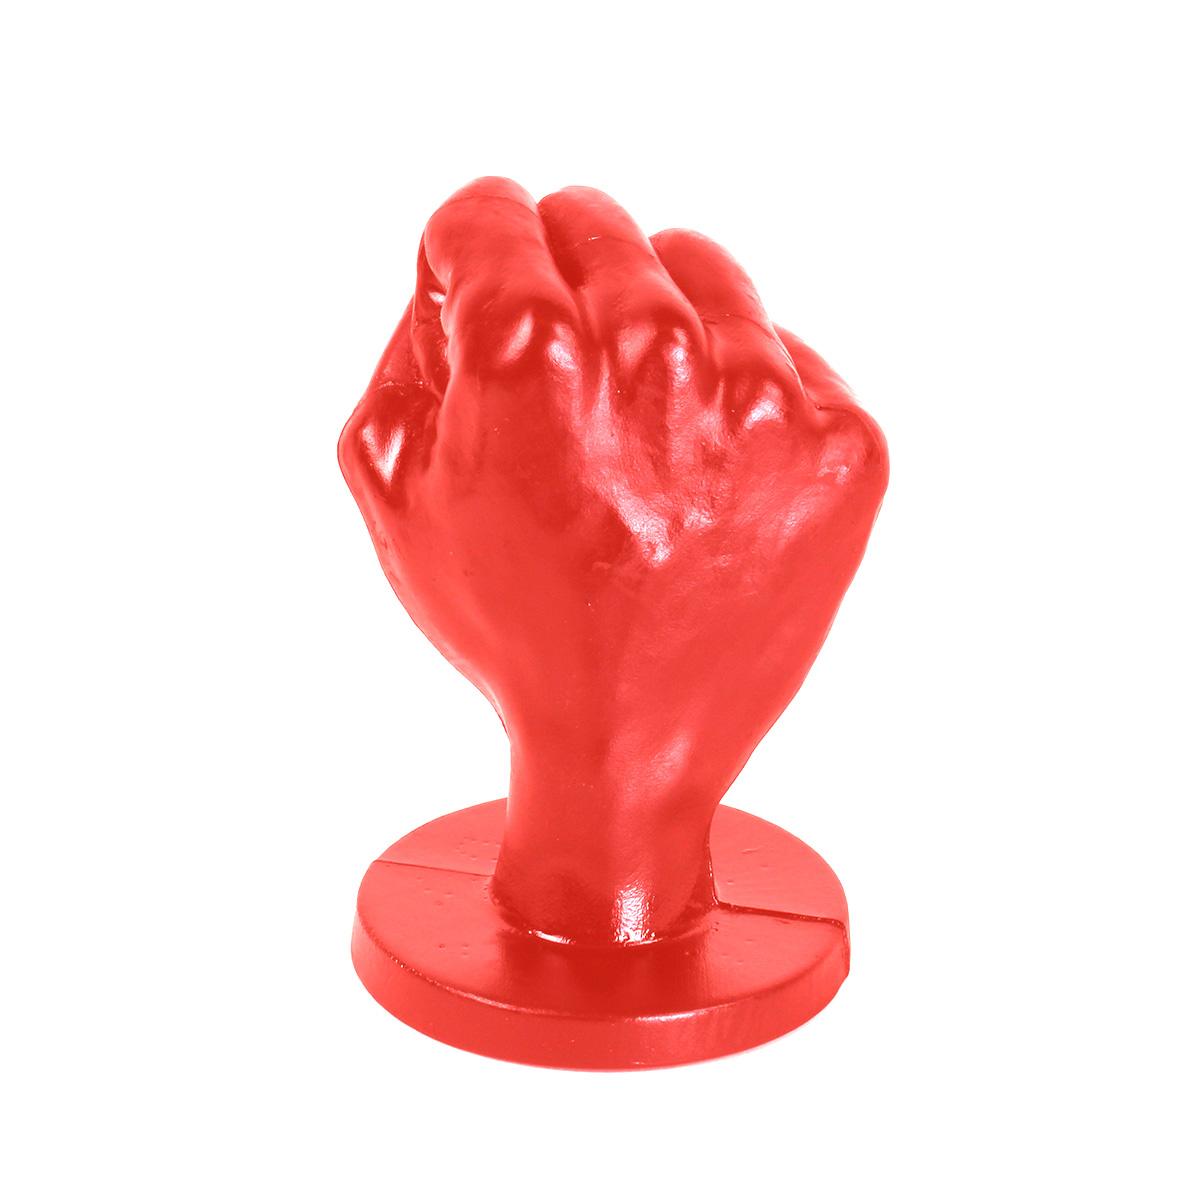 All-Red-Fist-Medium-ABR93-115-ABR93-2